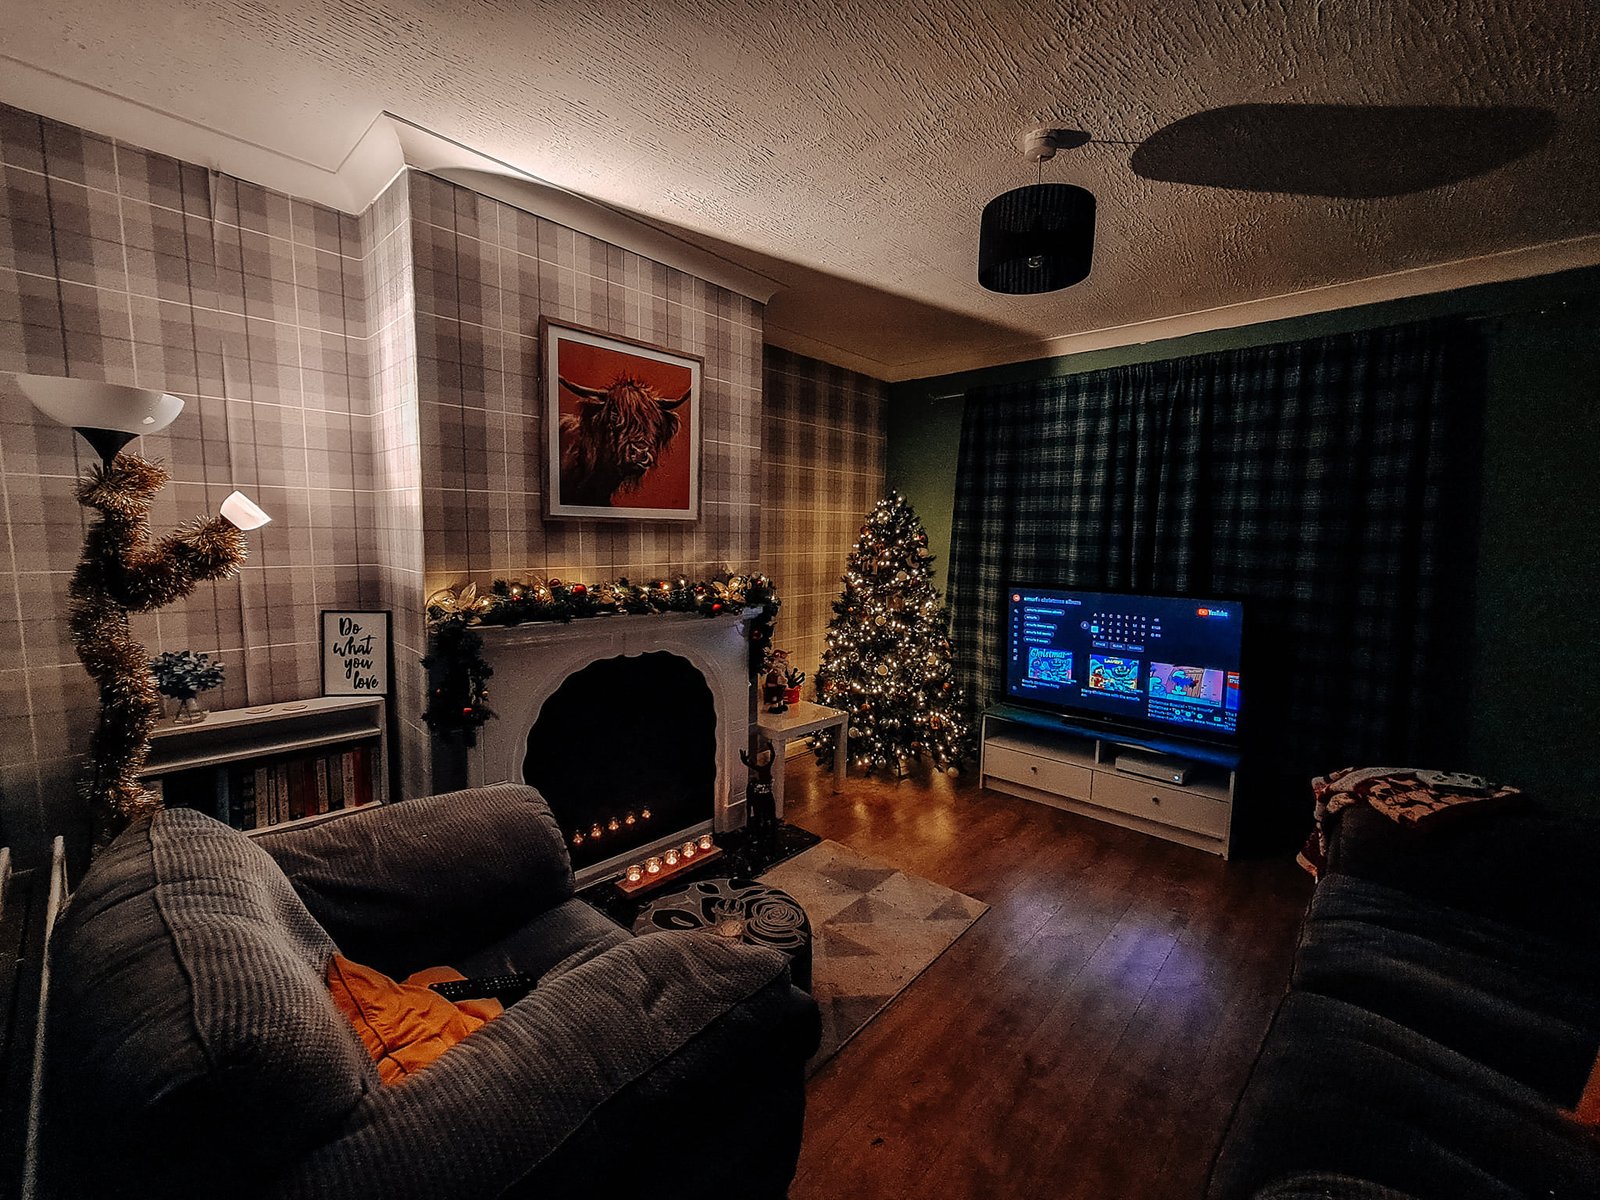 Living Room Idea - After